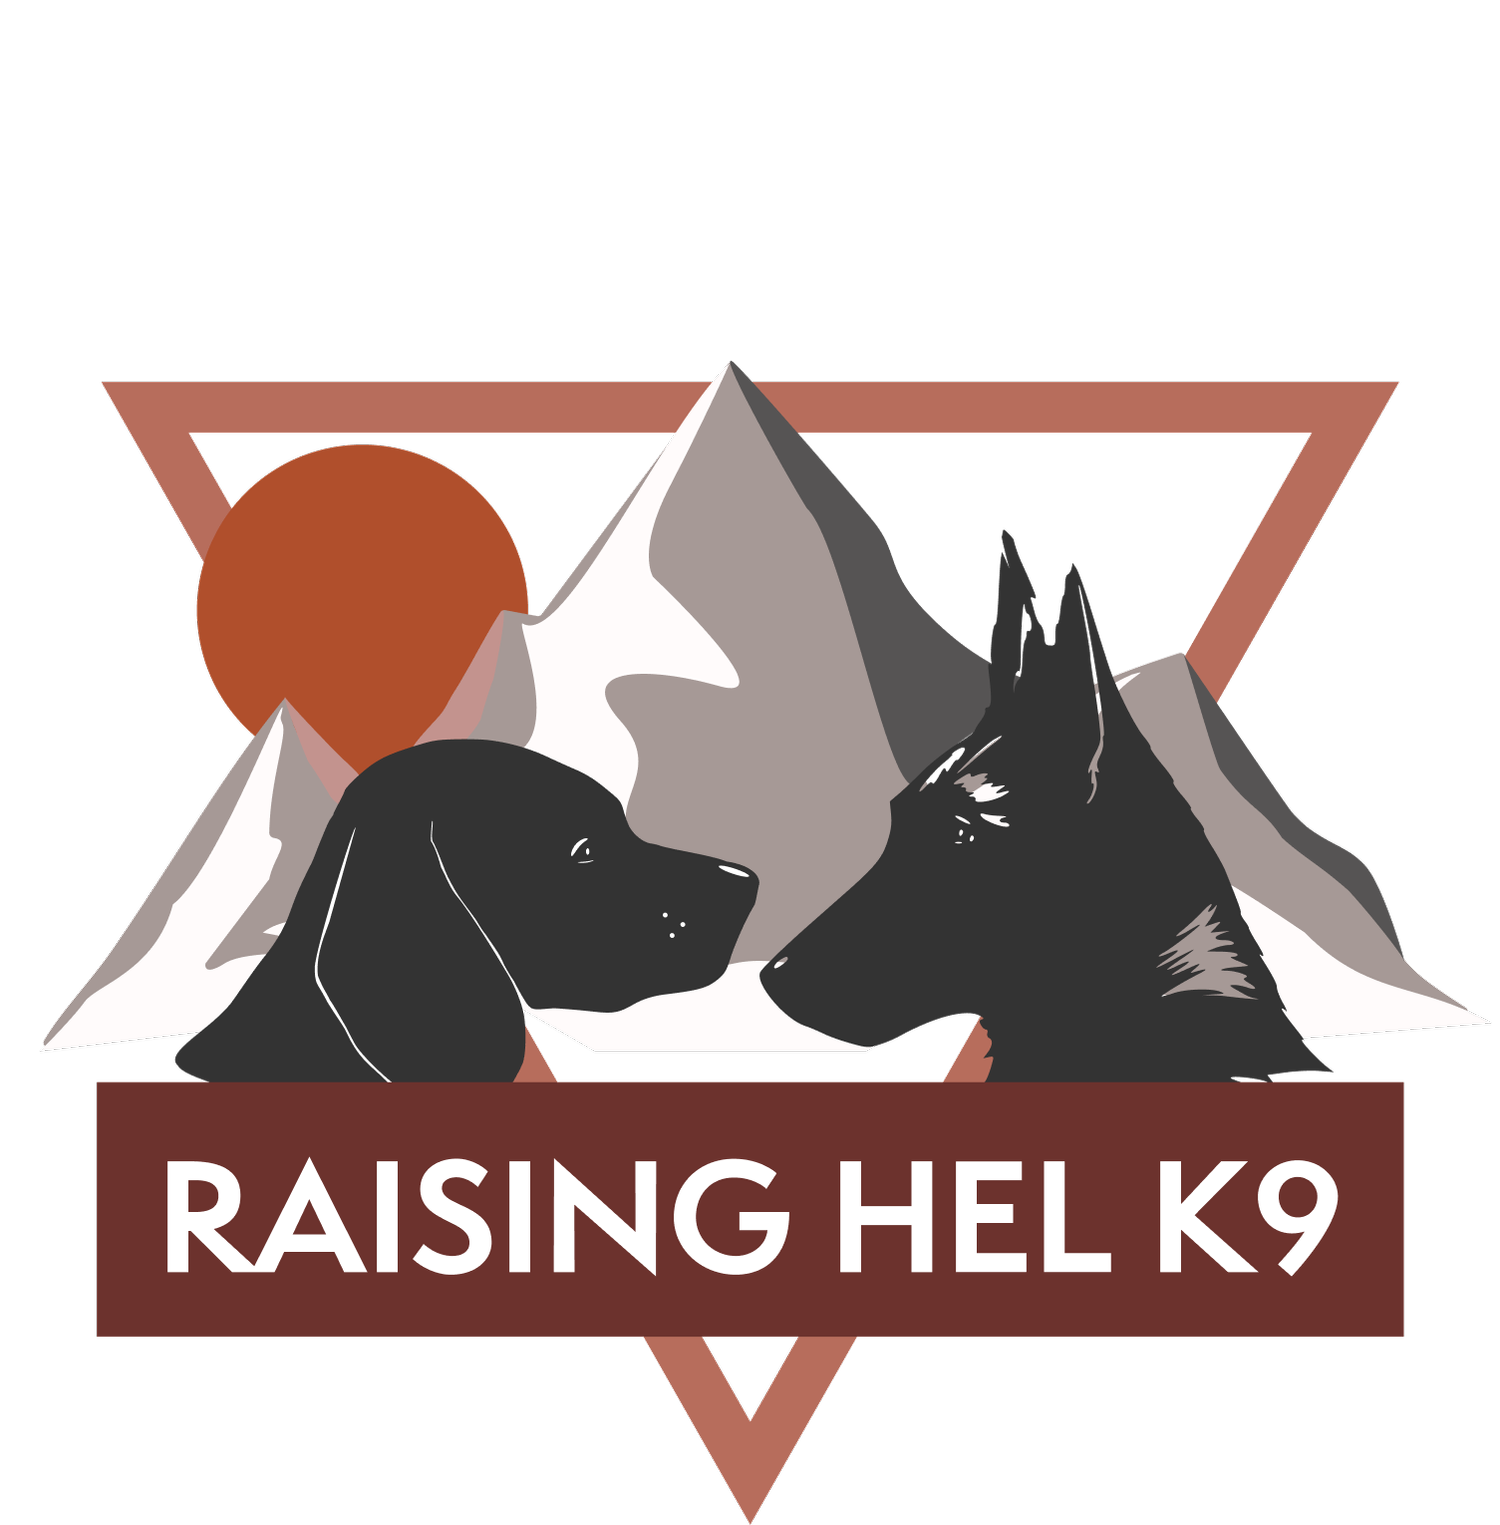 Raising Hel K9